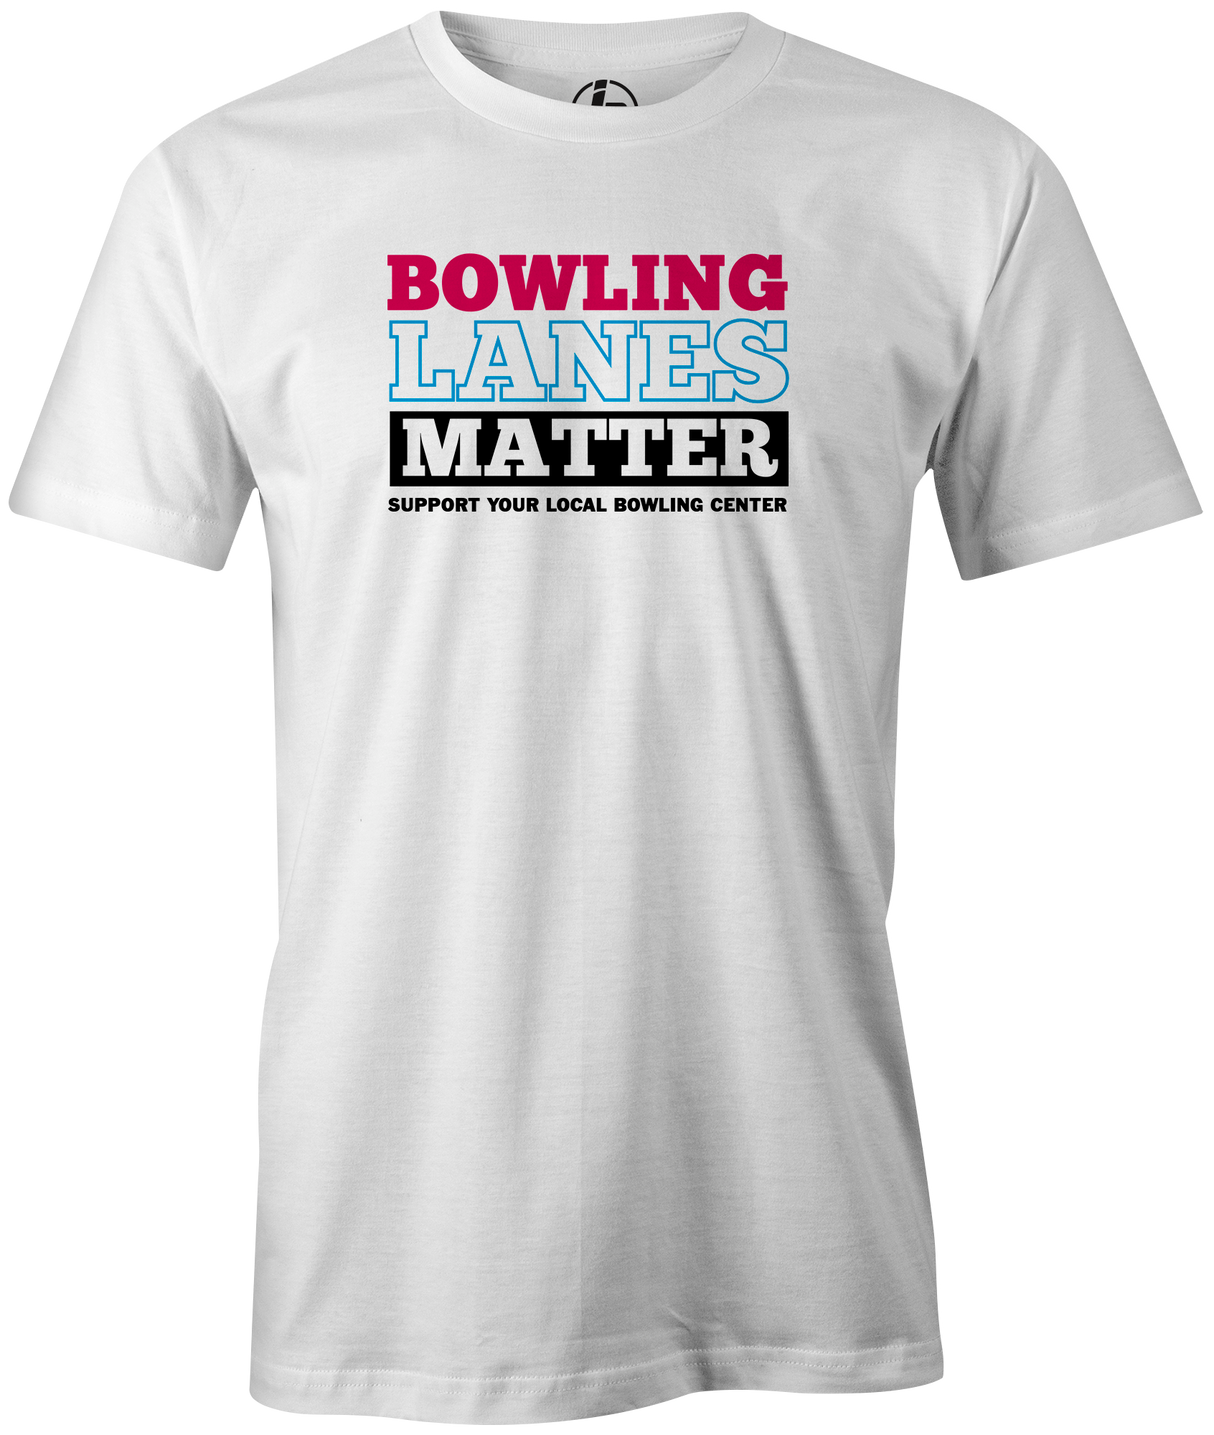 Bowling Lanes Matter Men's T-shirt, White,  cool, awesome, fun, tee, tee shirt, tee-shirt, vintage, original, league bowling shirt, tournament shirt